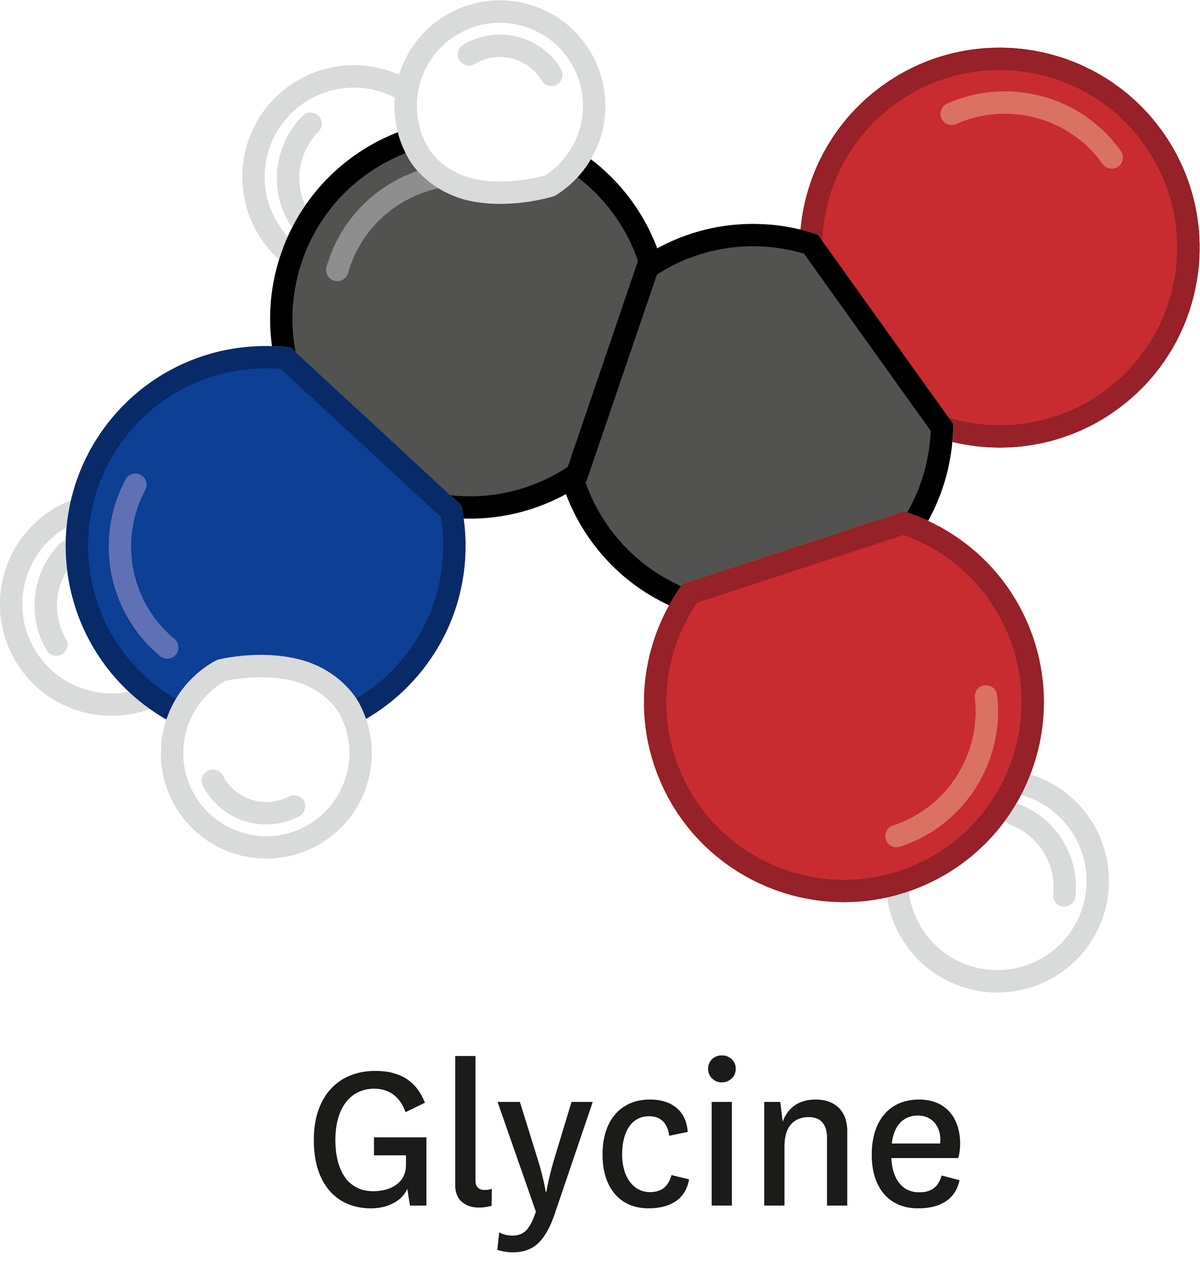 Glycine.